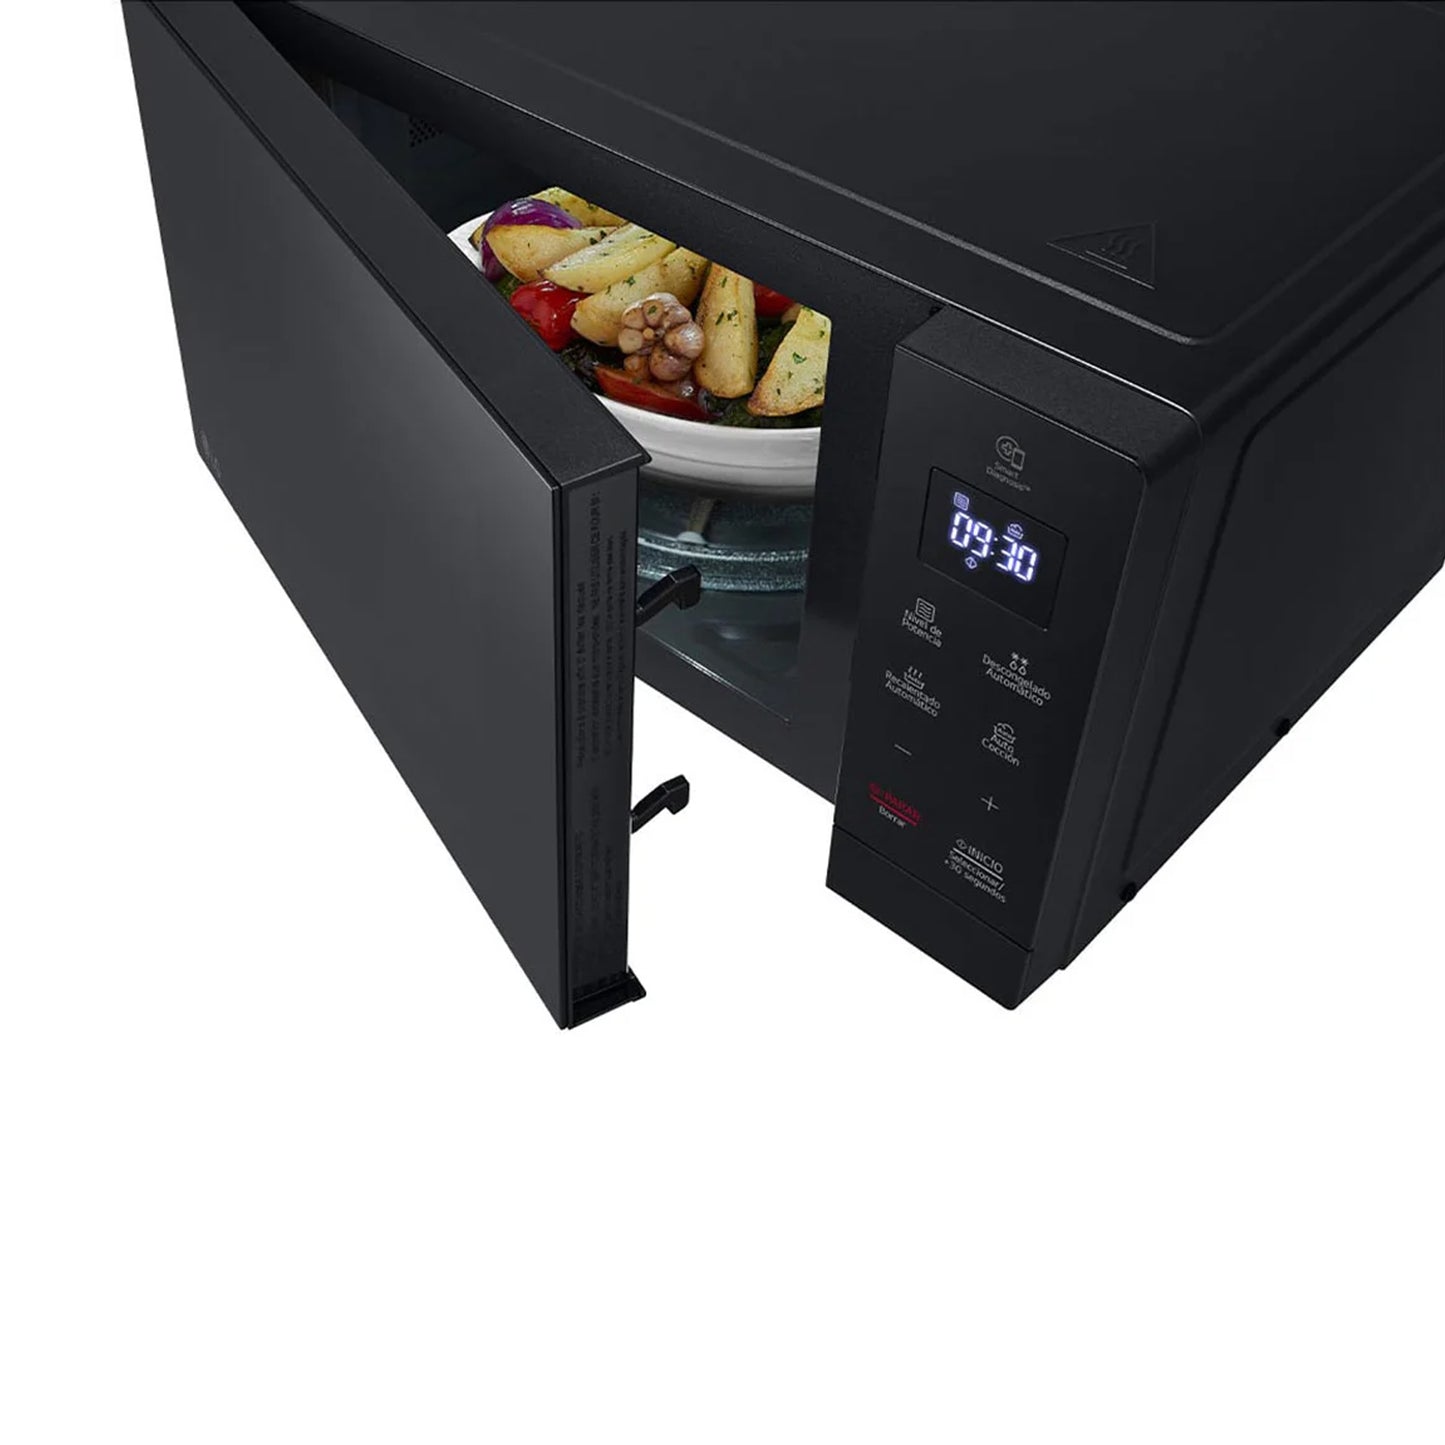 LG 30l Black Microwave - MS3032JAS